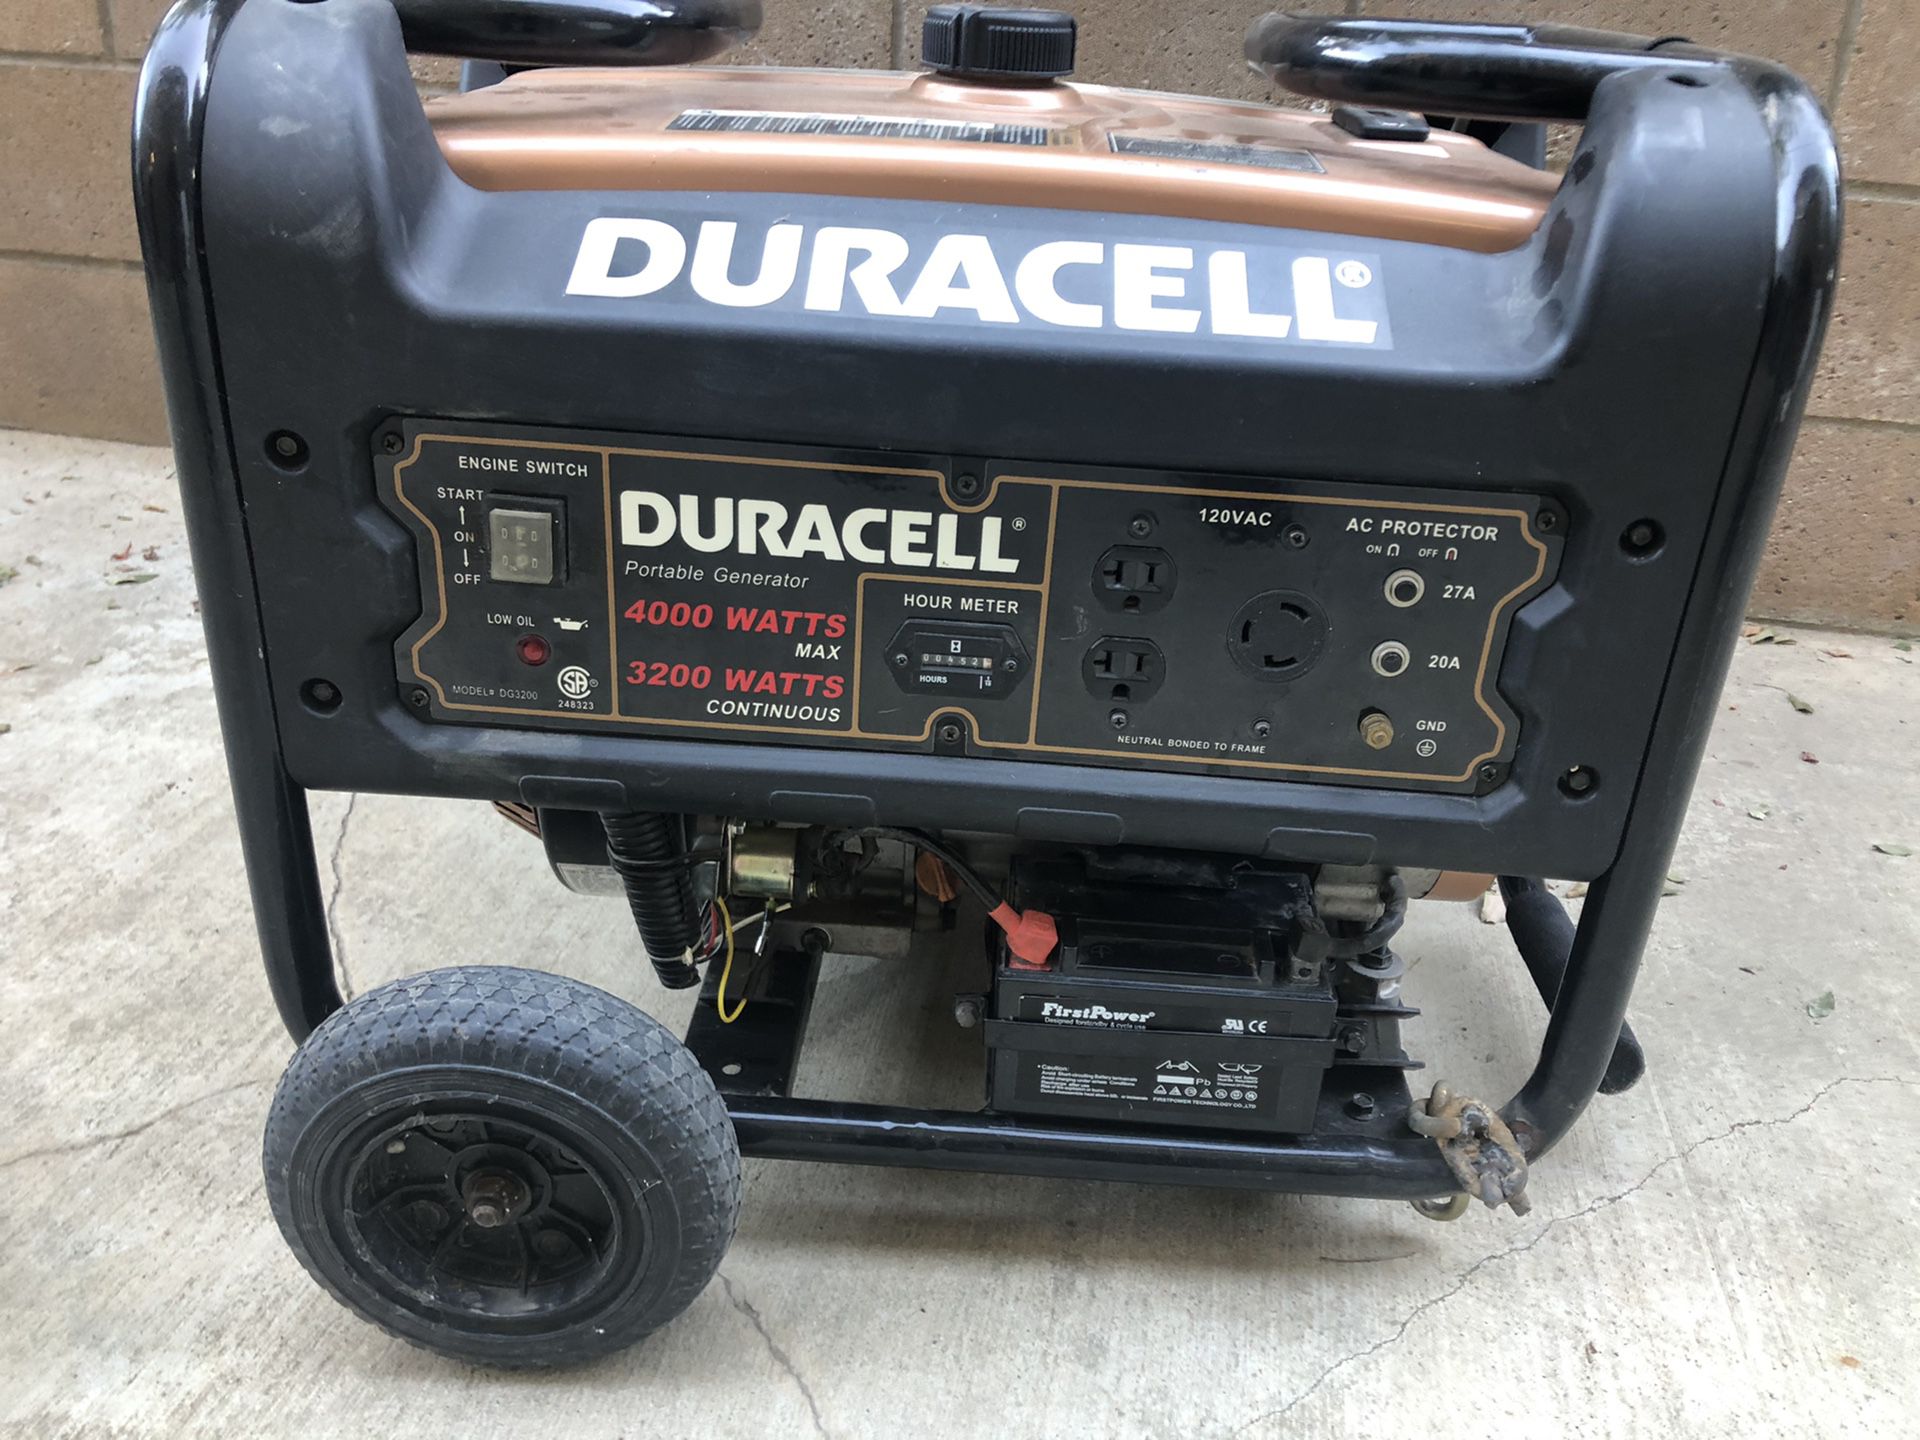 Duracell generator model DG3200